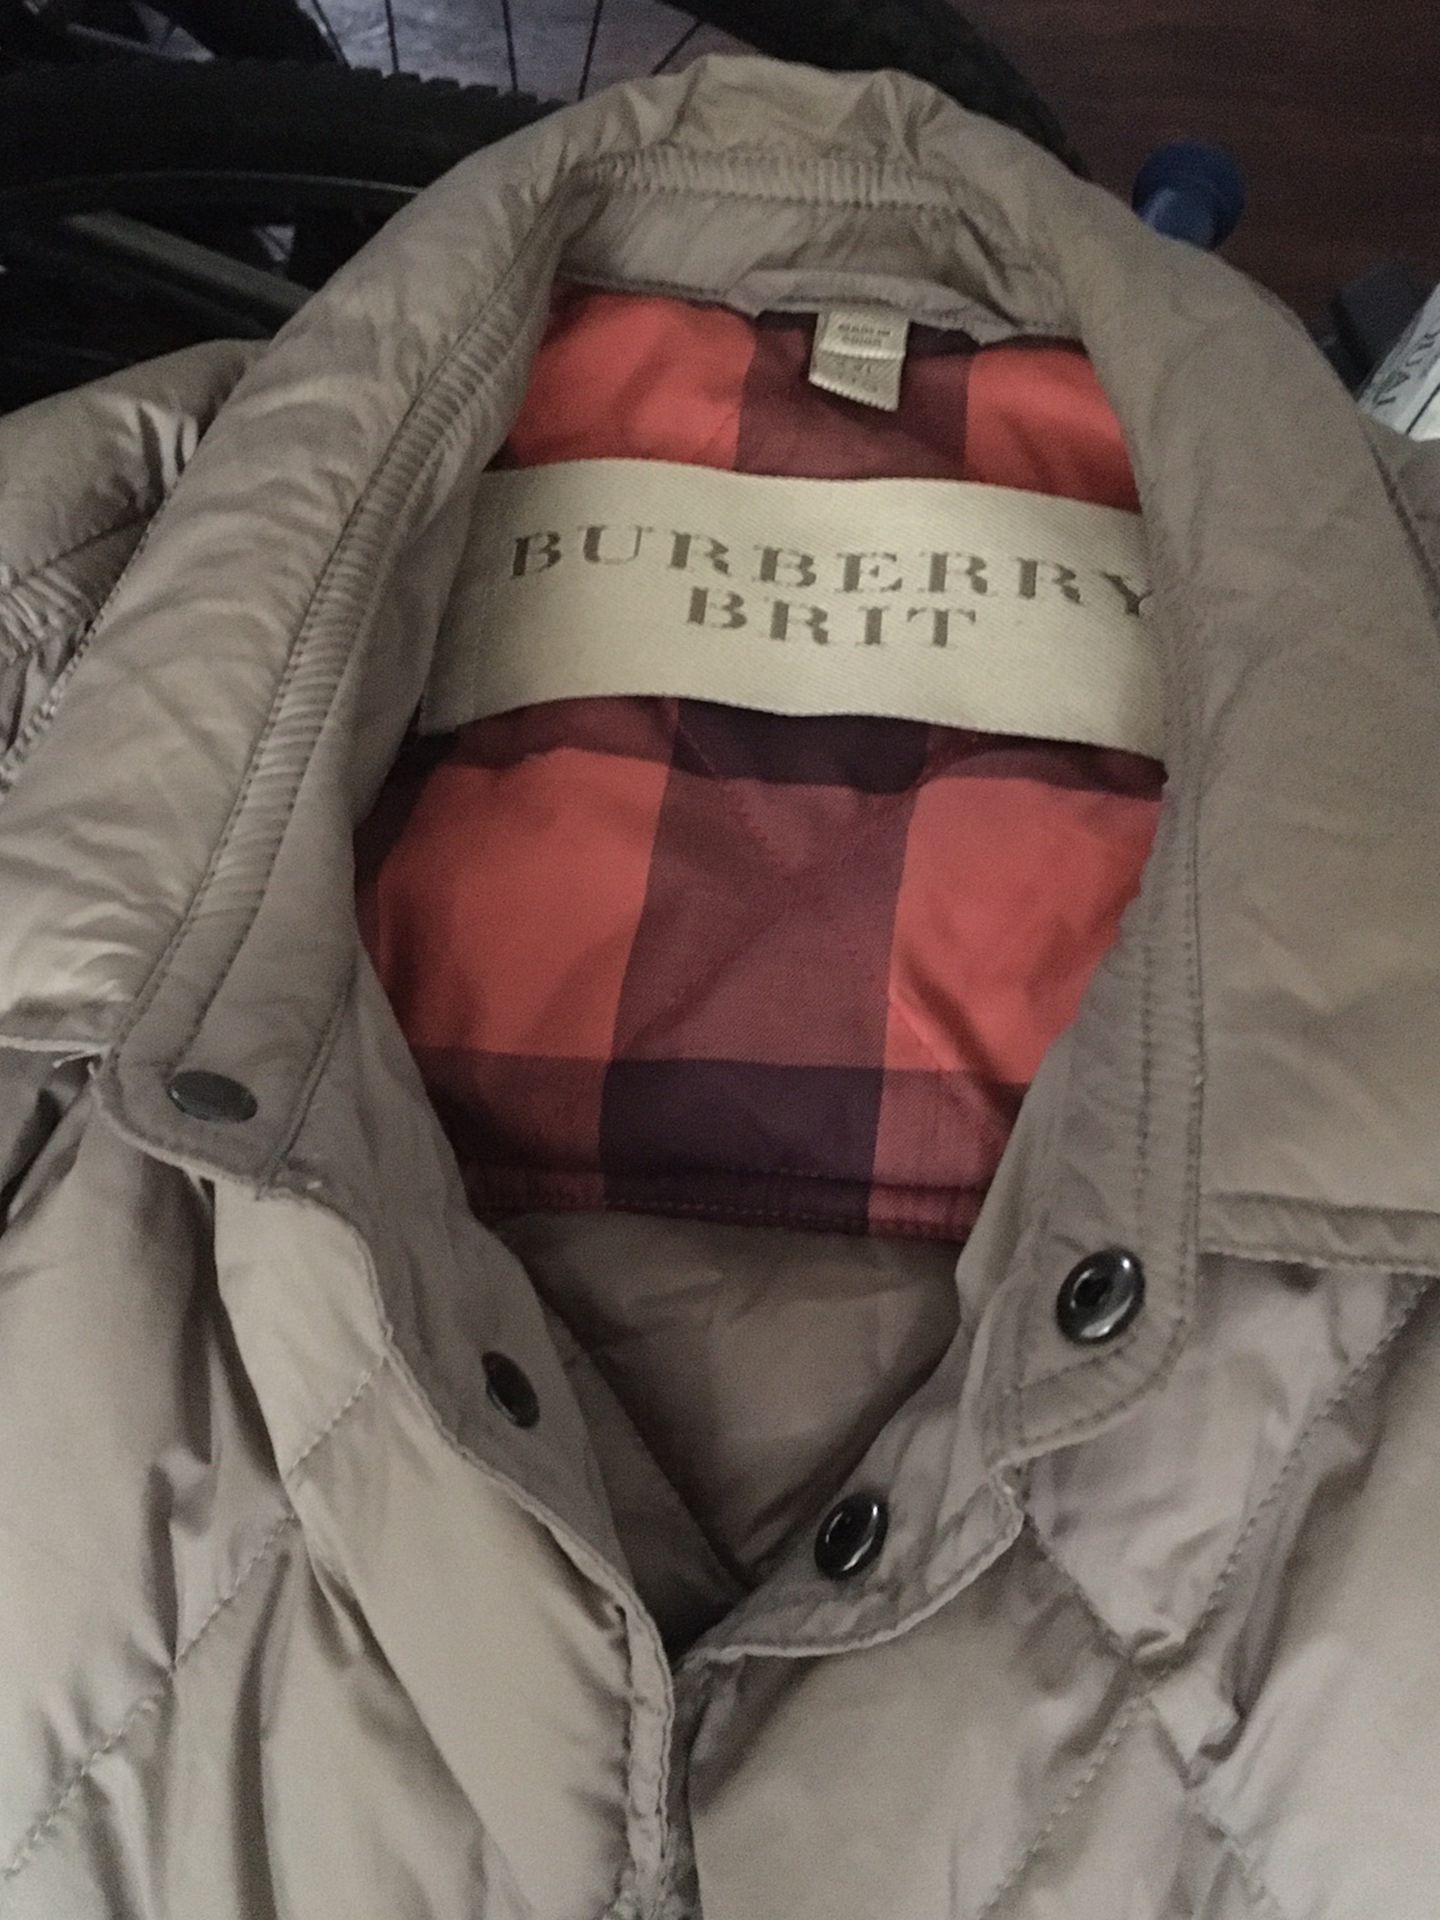 Authentic Burberry Jacket Size XxL Men’s Cut Small Like A XL